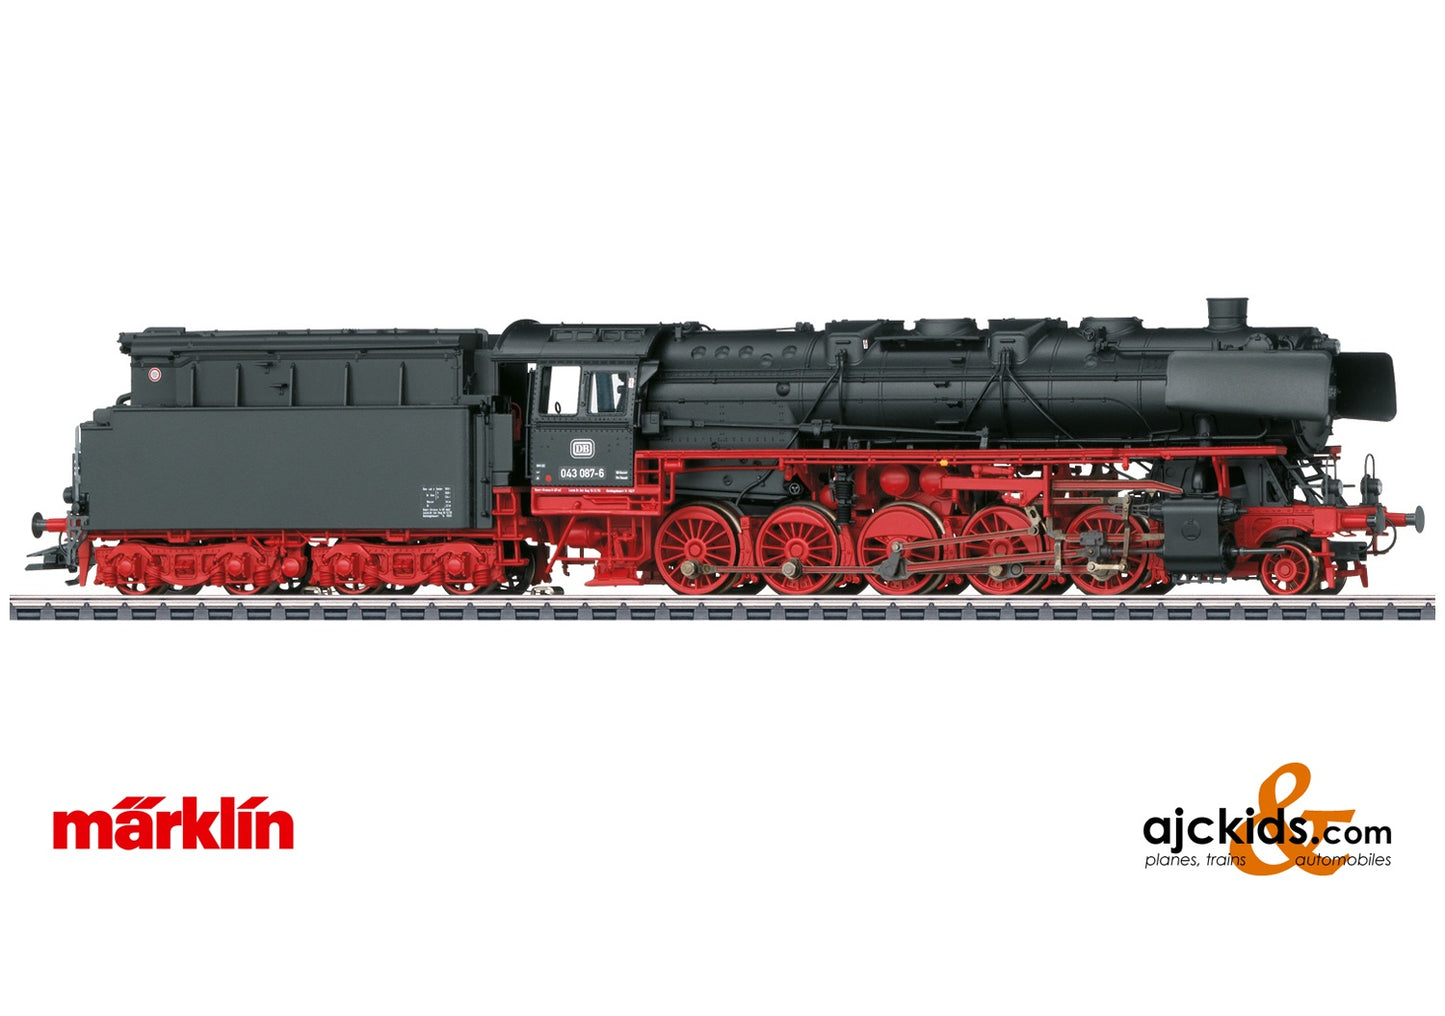 Marklin 39884 - Class 043 Steam Locomotive at Ajckids.com